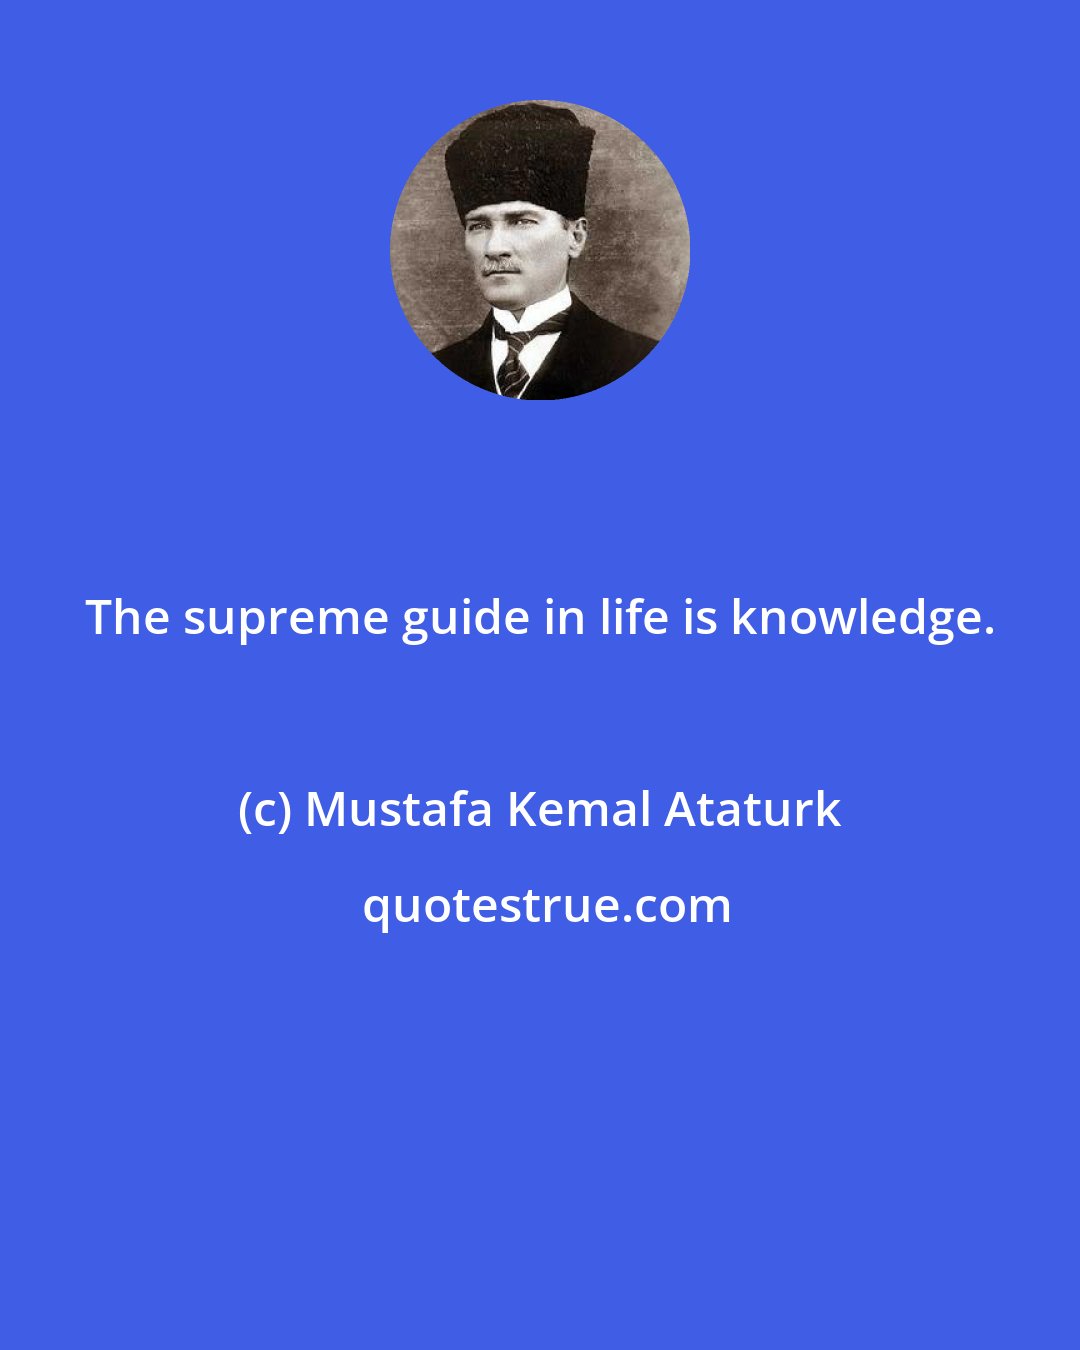 Mustafa Kemal Ataturk: The supreme guide in life is knowledge.